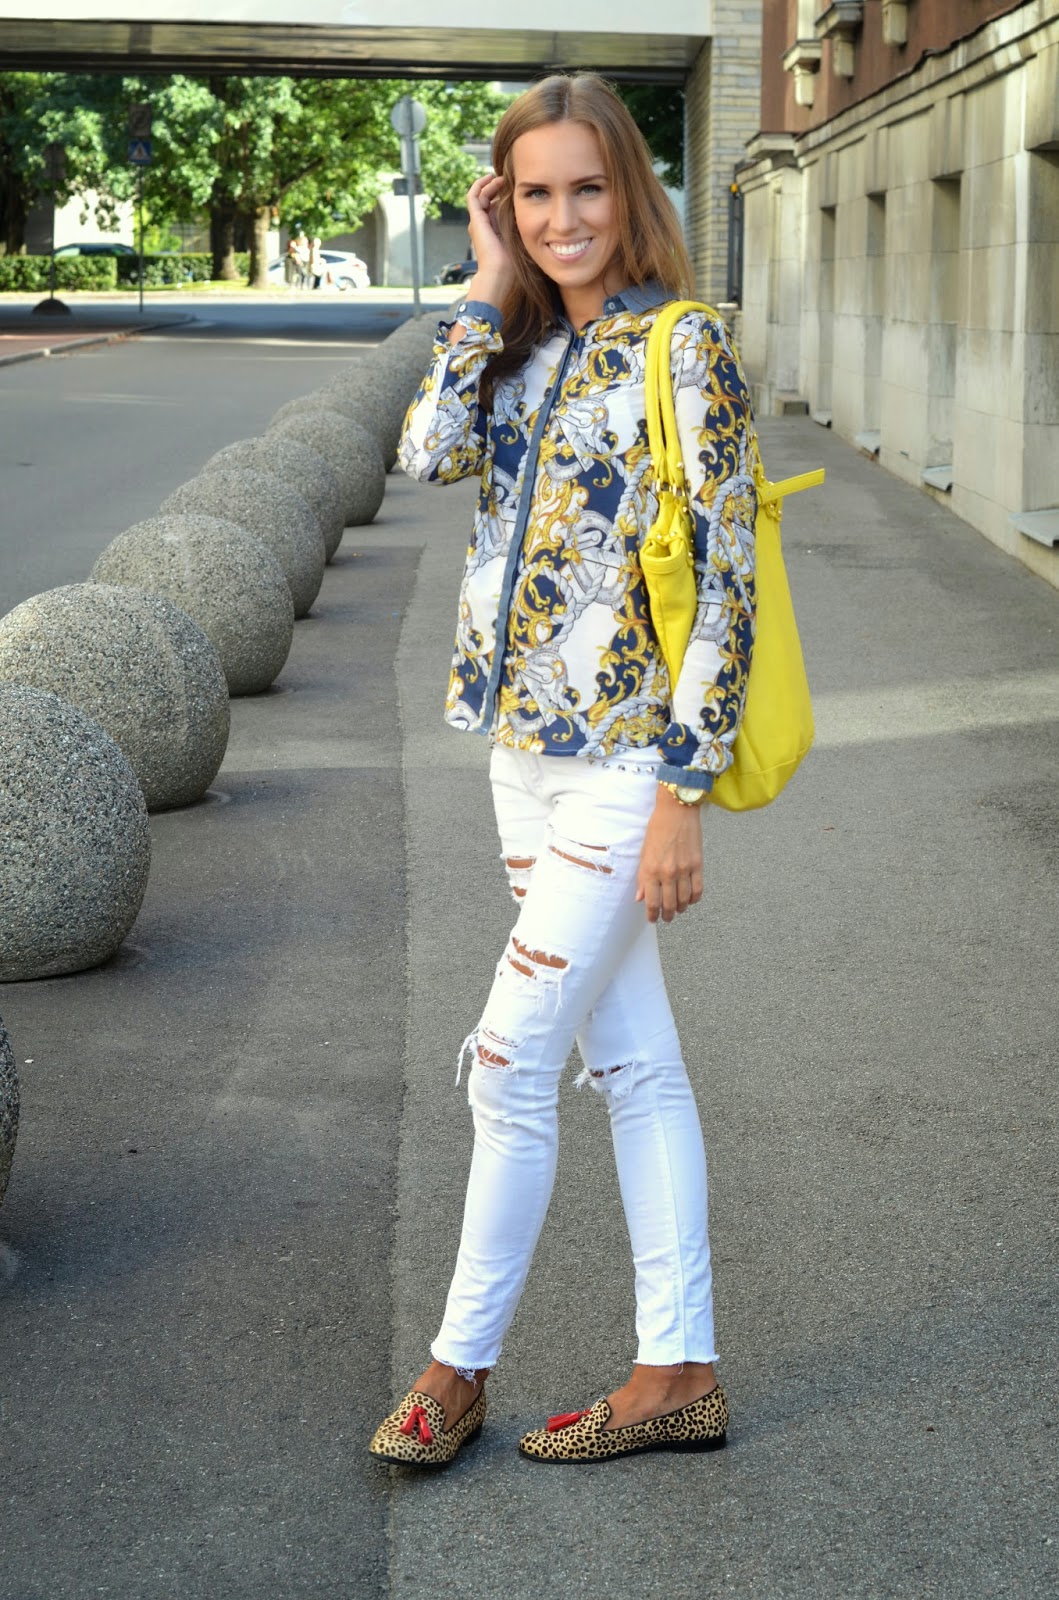 leopard fur flats white jeans yellow bag print top